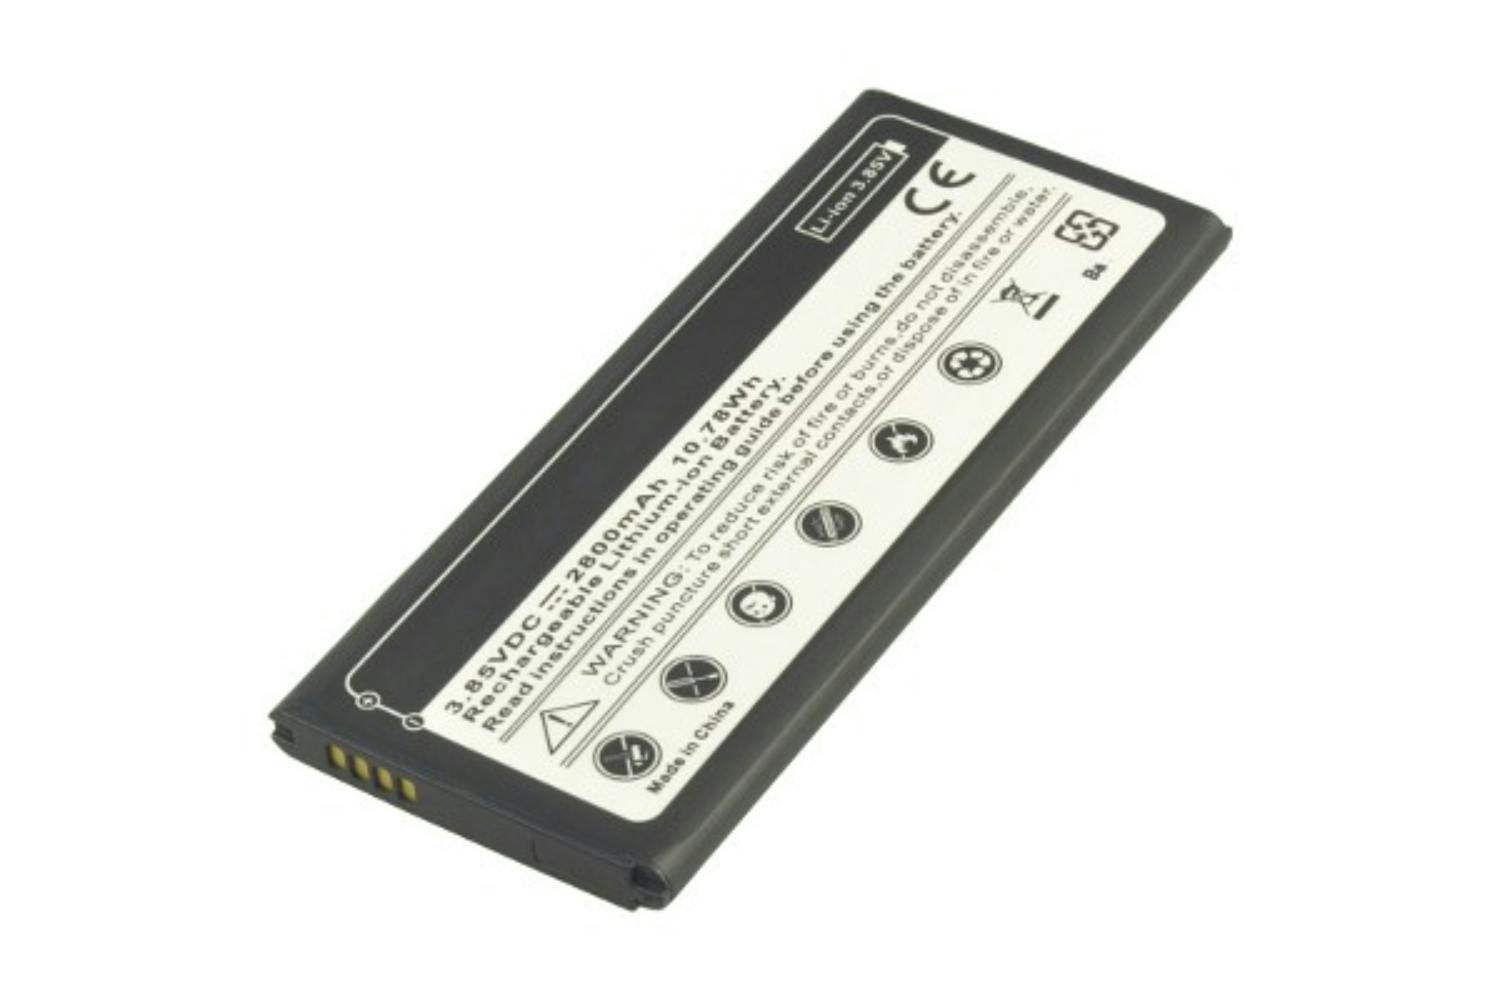 2-Power MBI0156A 3200mAh Smartphone Battery